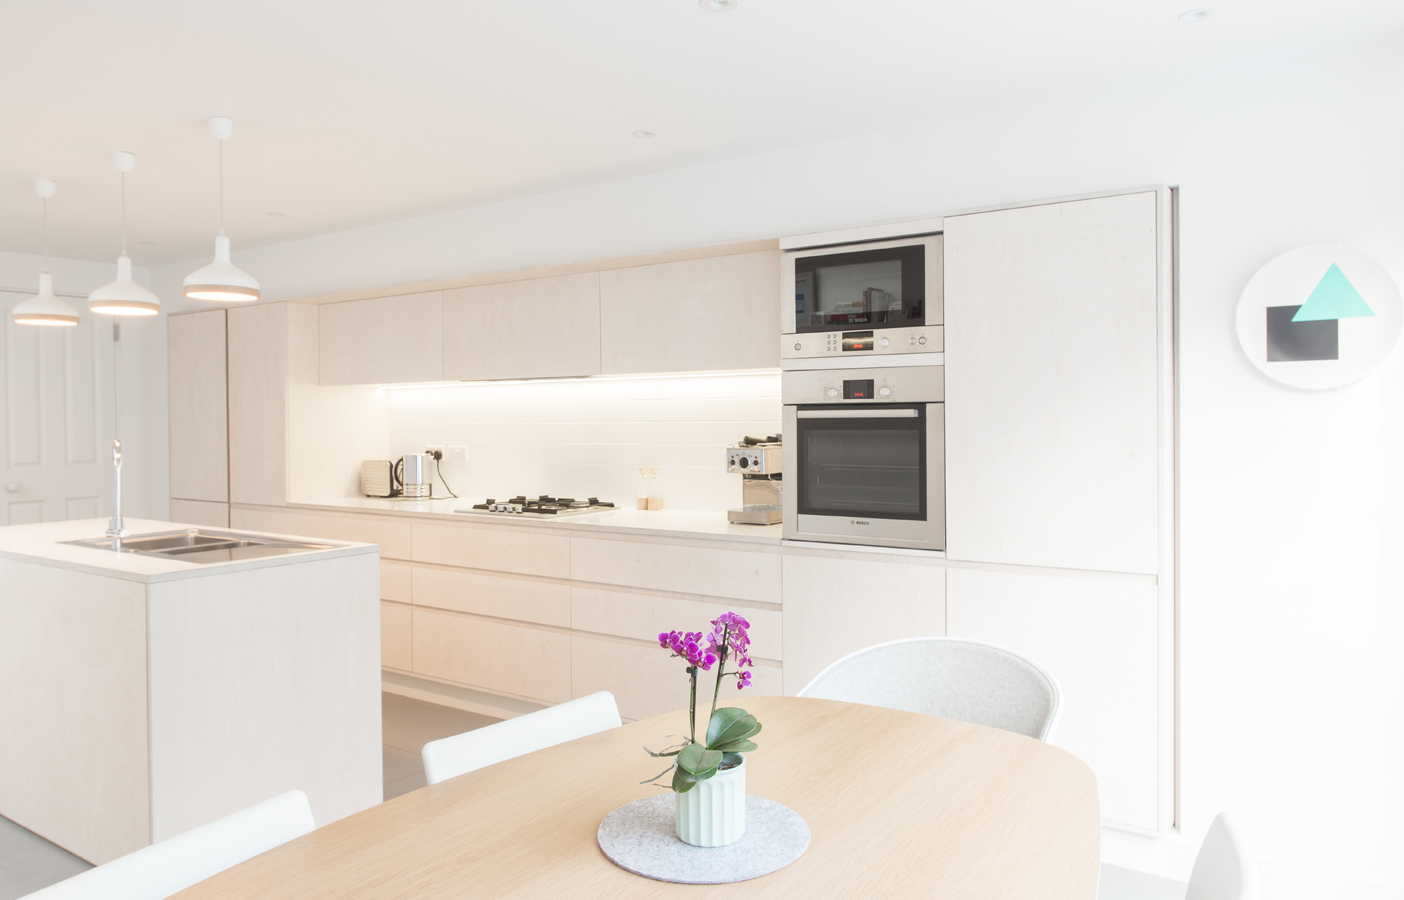 Aldworth James & Bond | Kitchen design by AJ&B Studio in Battersea home